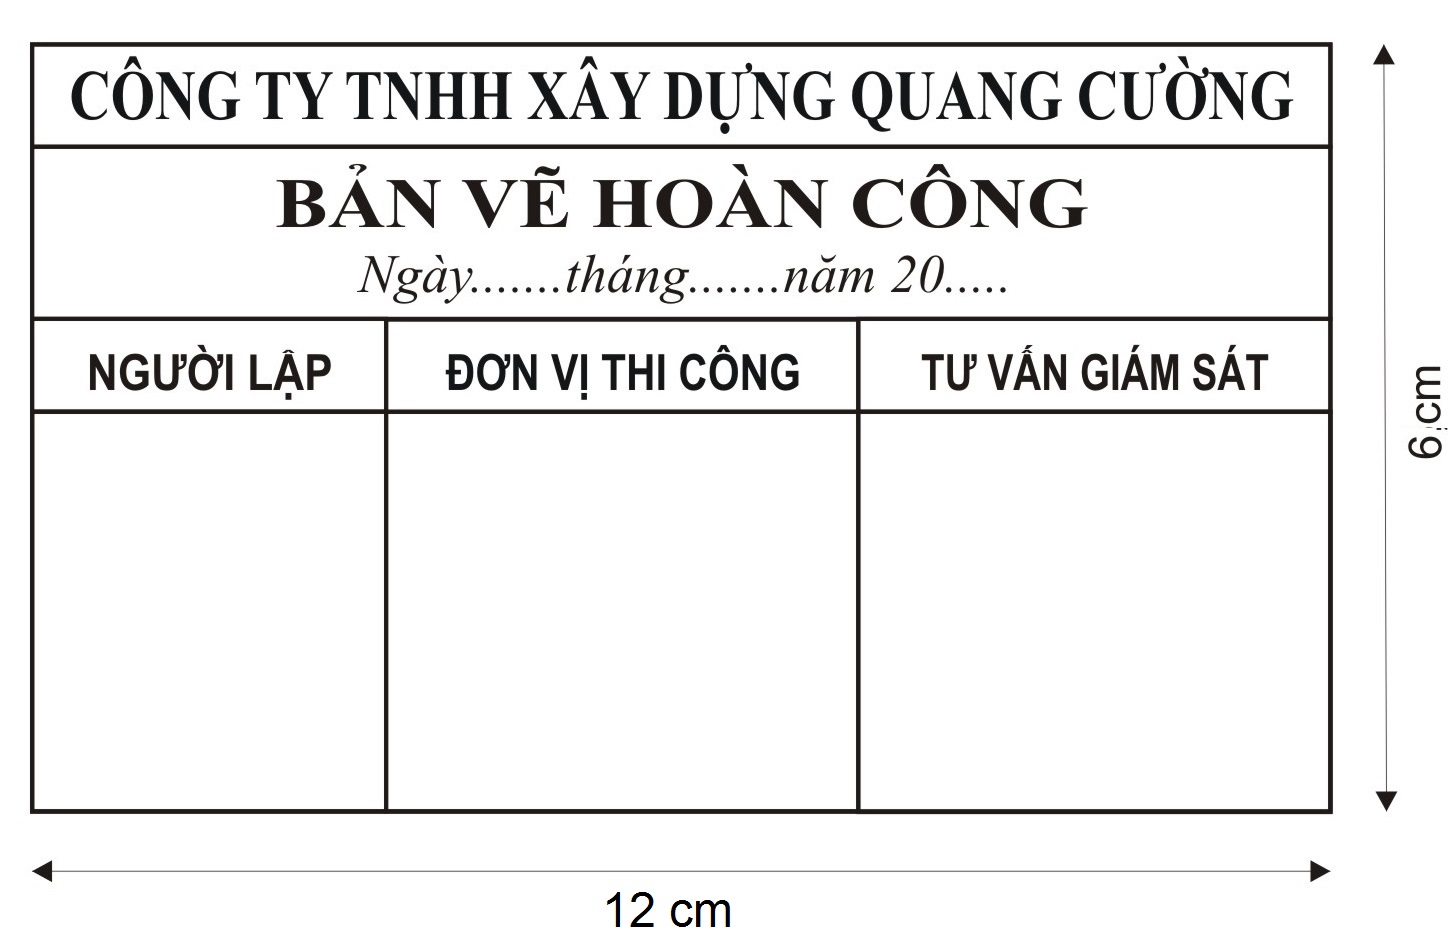 ban-ve-hoan-cong-6x12.jpg